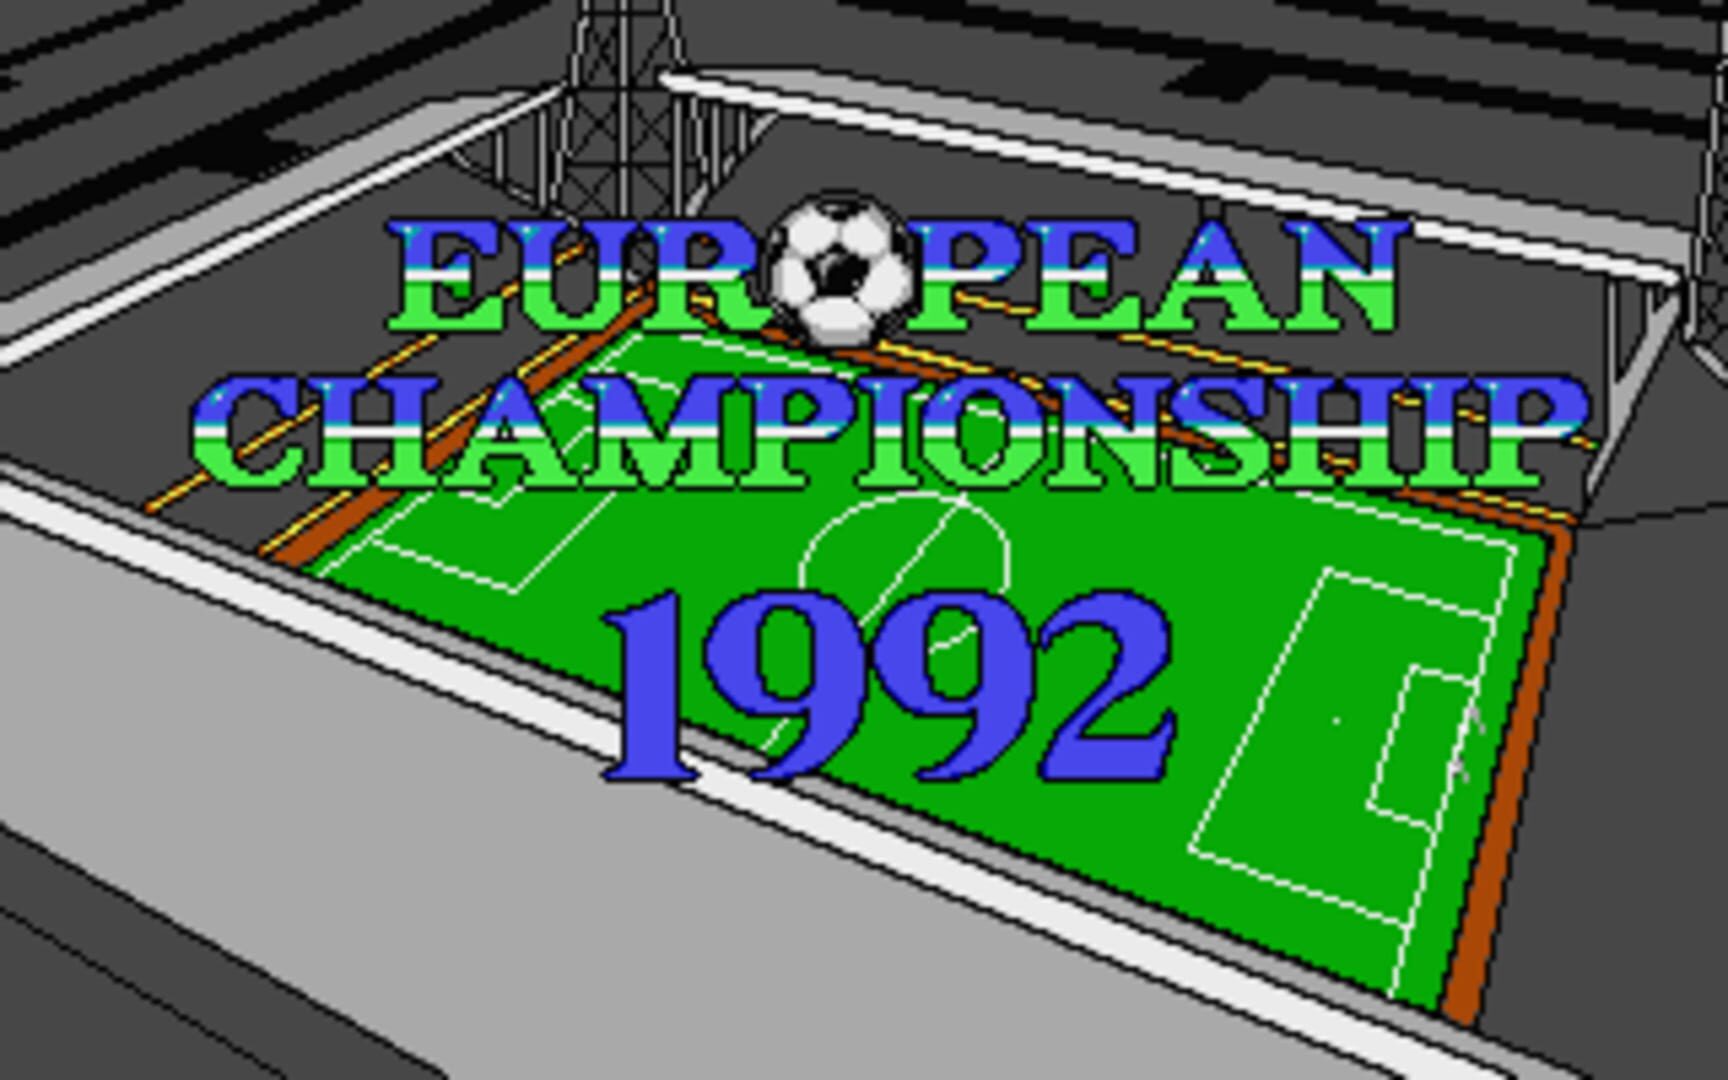 European Championship 1992